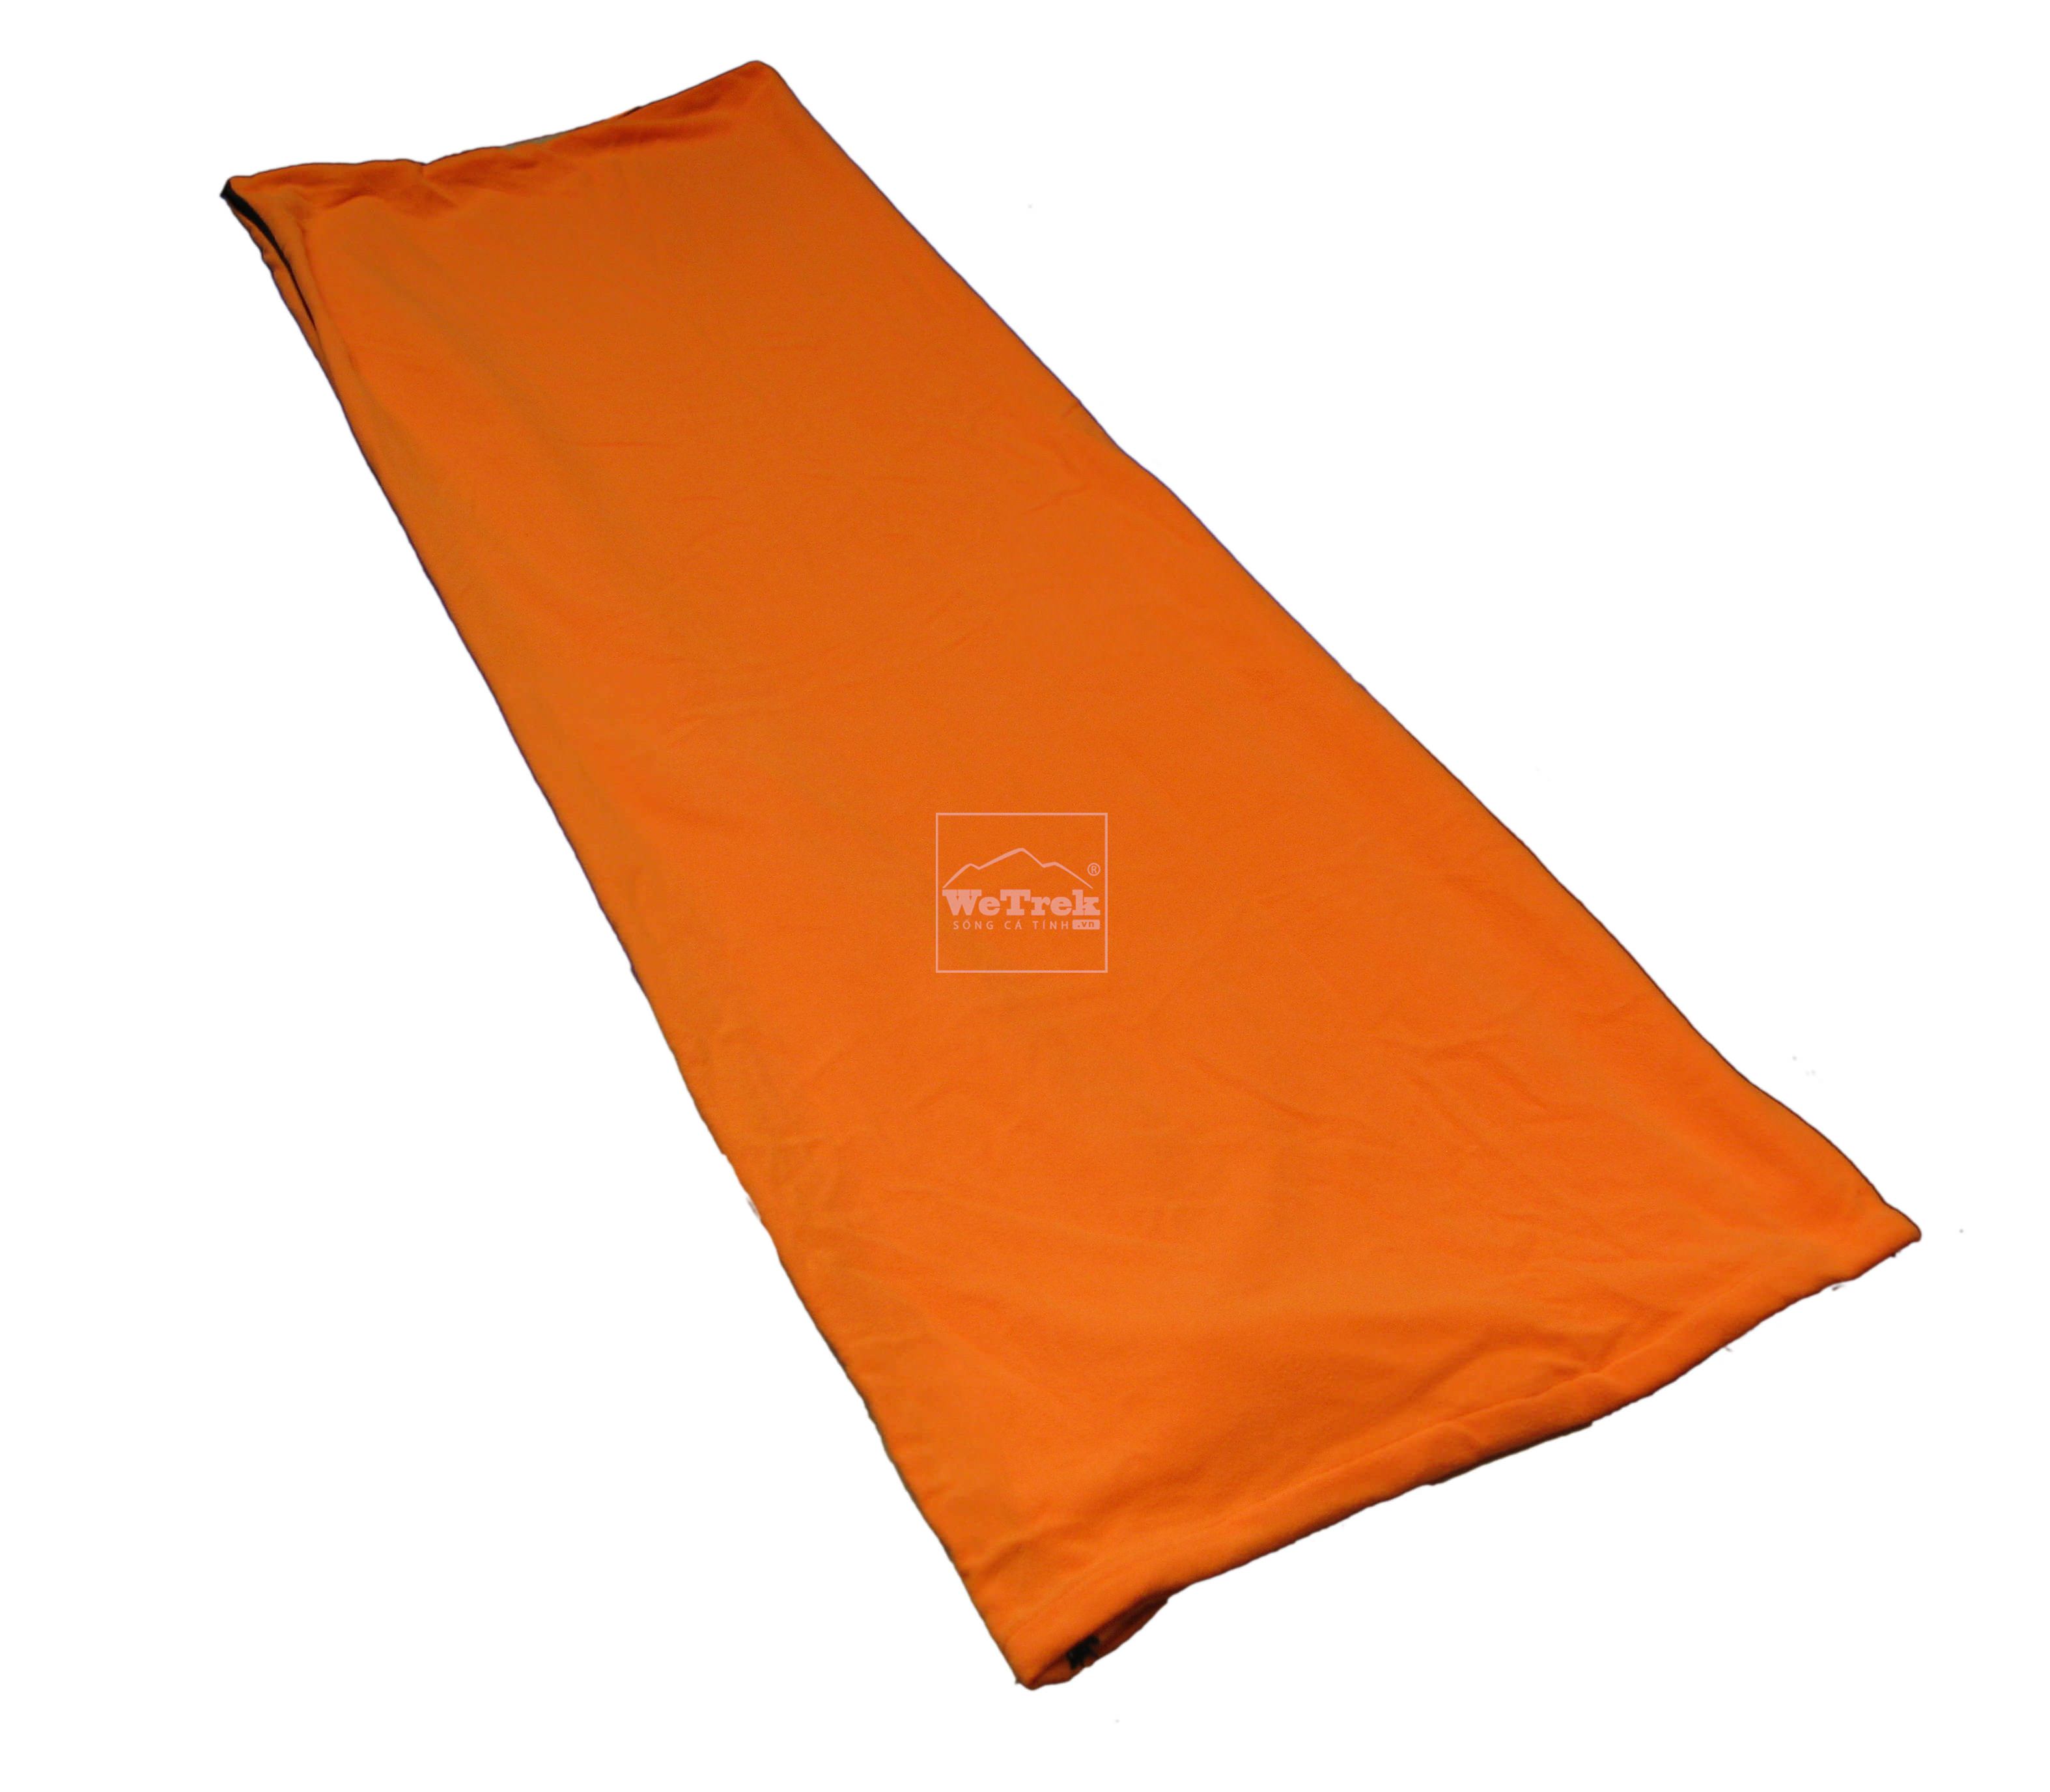 Tui-ngu-ni-Comfort-Ultralight-Sleeping-Bag-Orange-5552_wetrek_vn